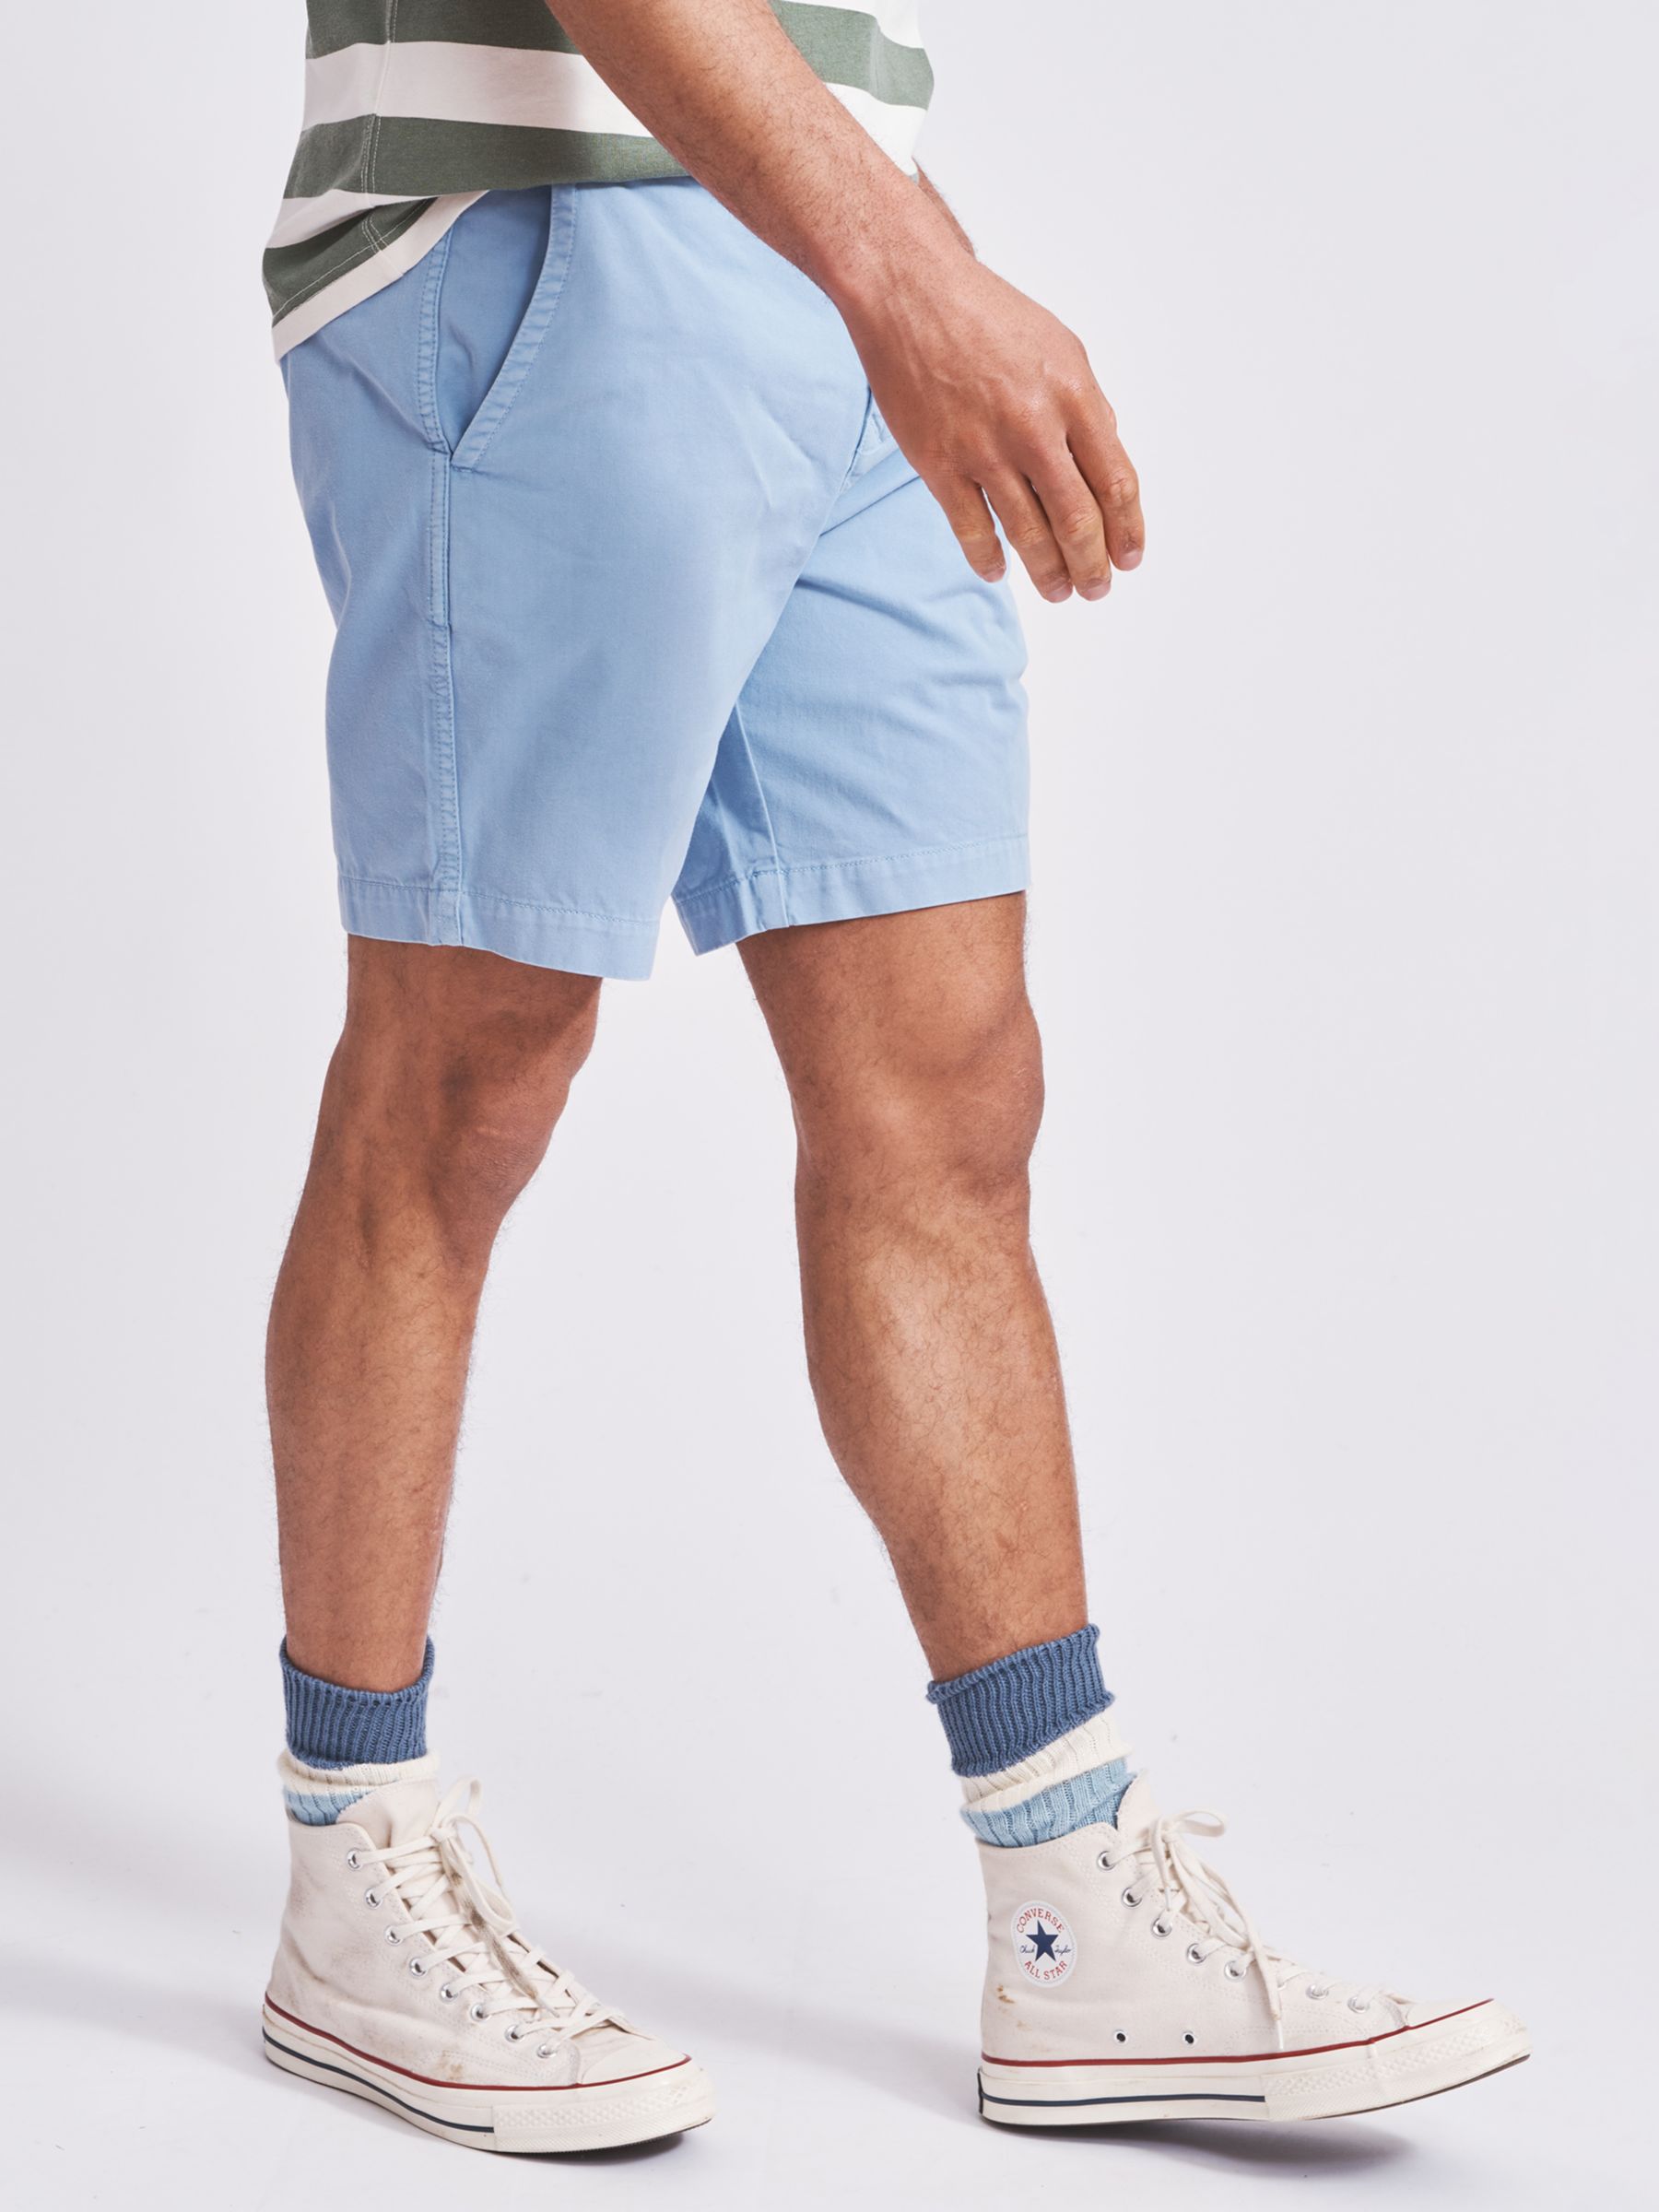 Aubin Stamford Chino Shorts, Blue, 30R